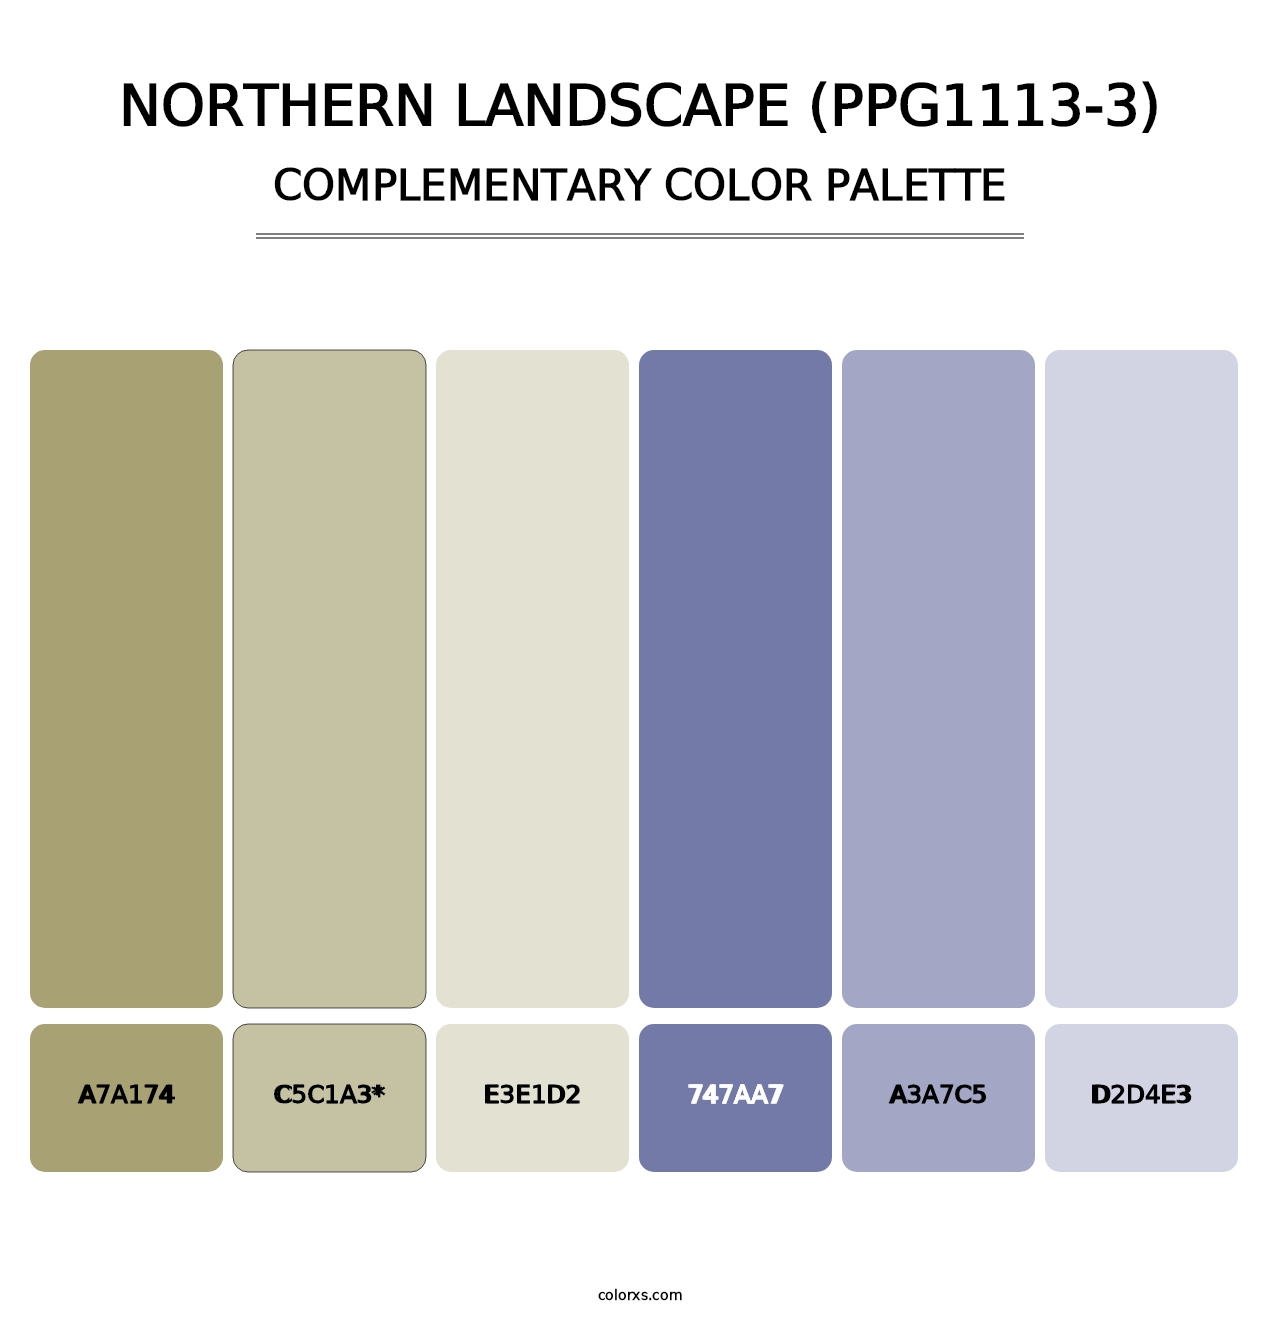 Northern Landscape (PPG1113-3) - Complementary Color Palette